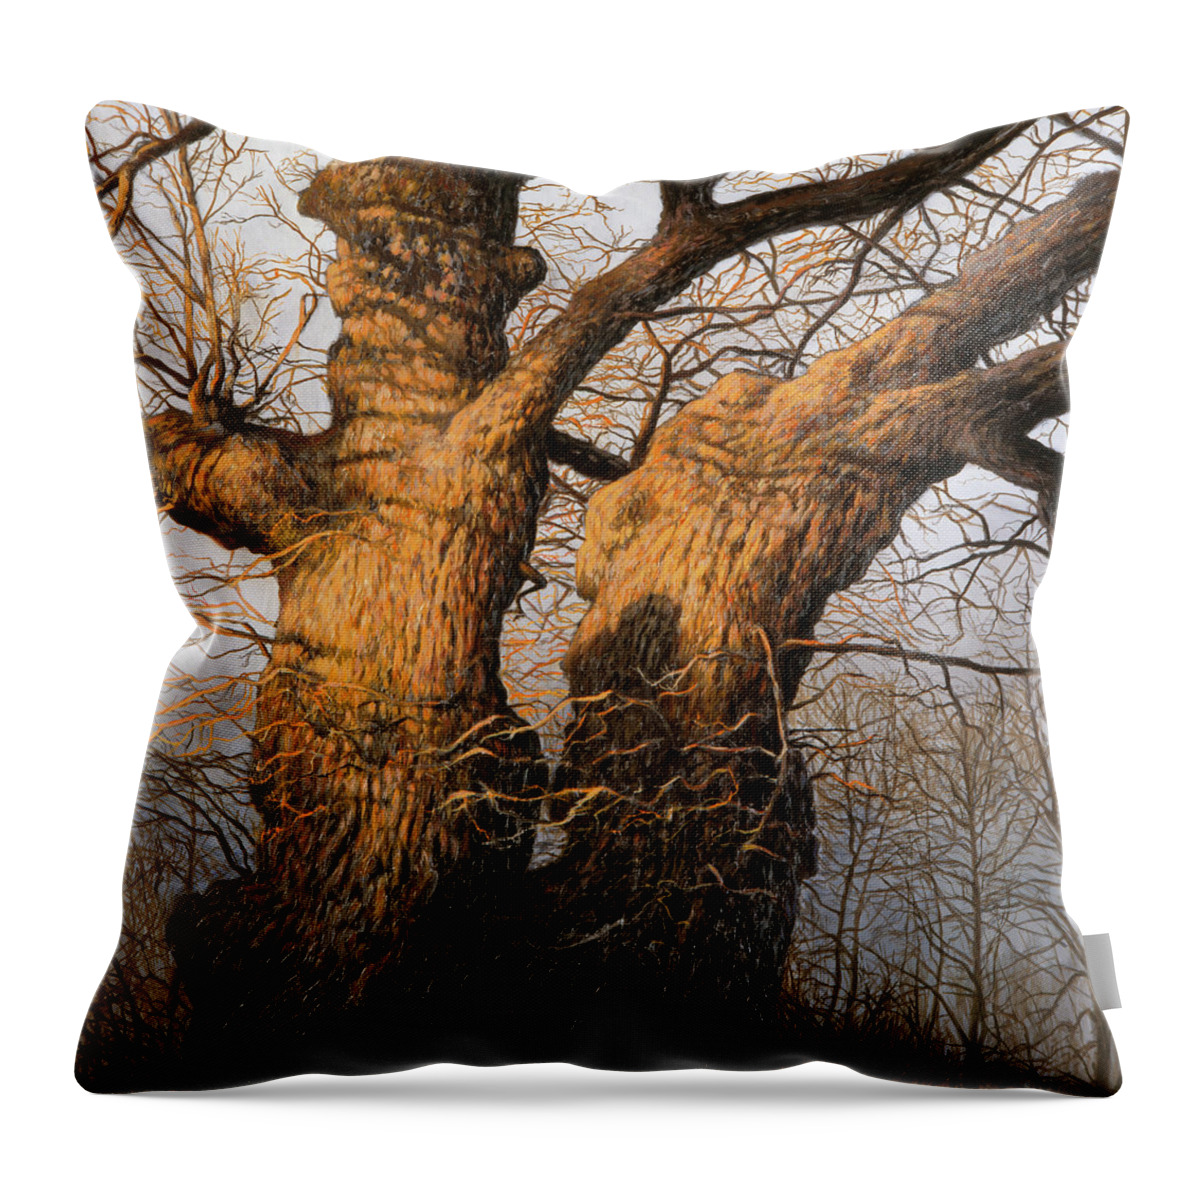 Hans Egil Saele Throw Pillow featuring the painting The Old Oak by Hans Egil Saele